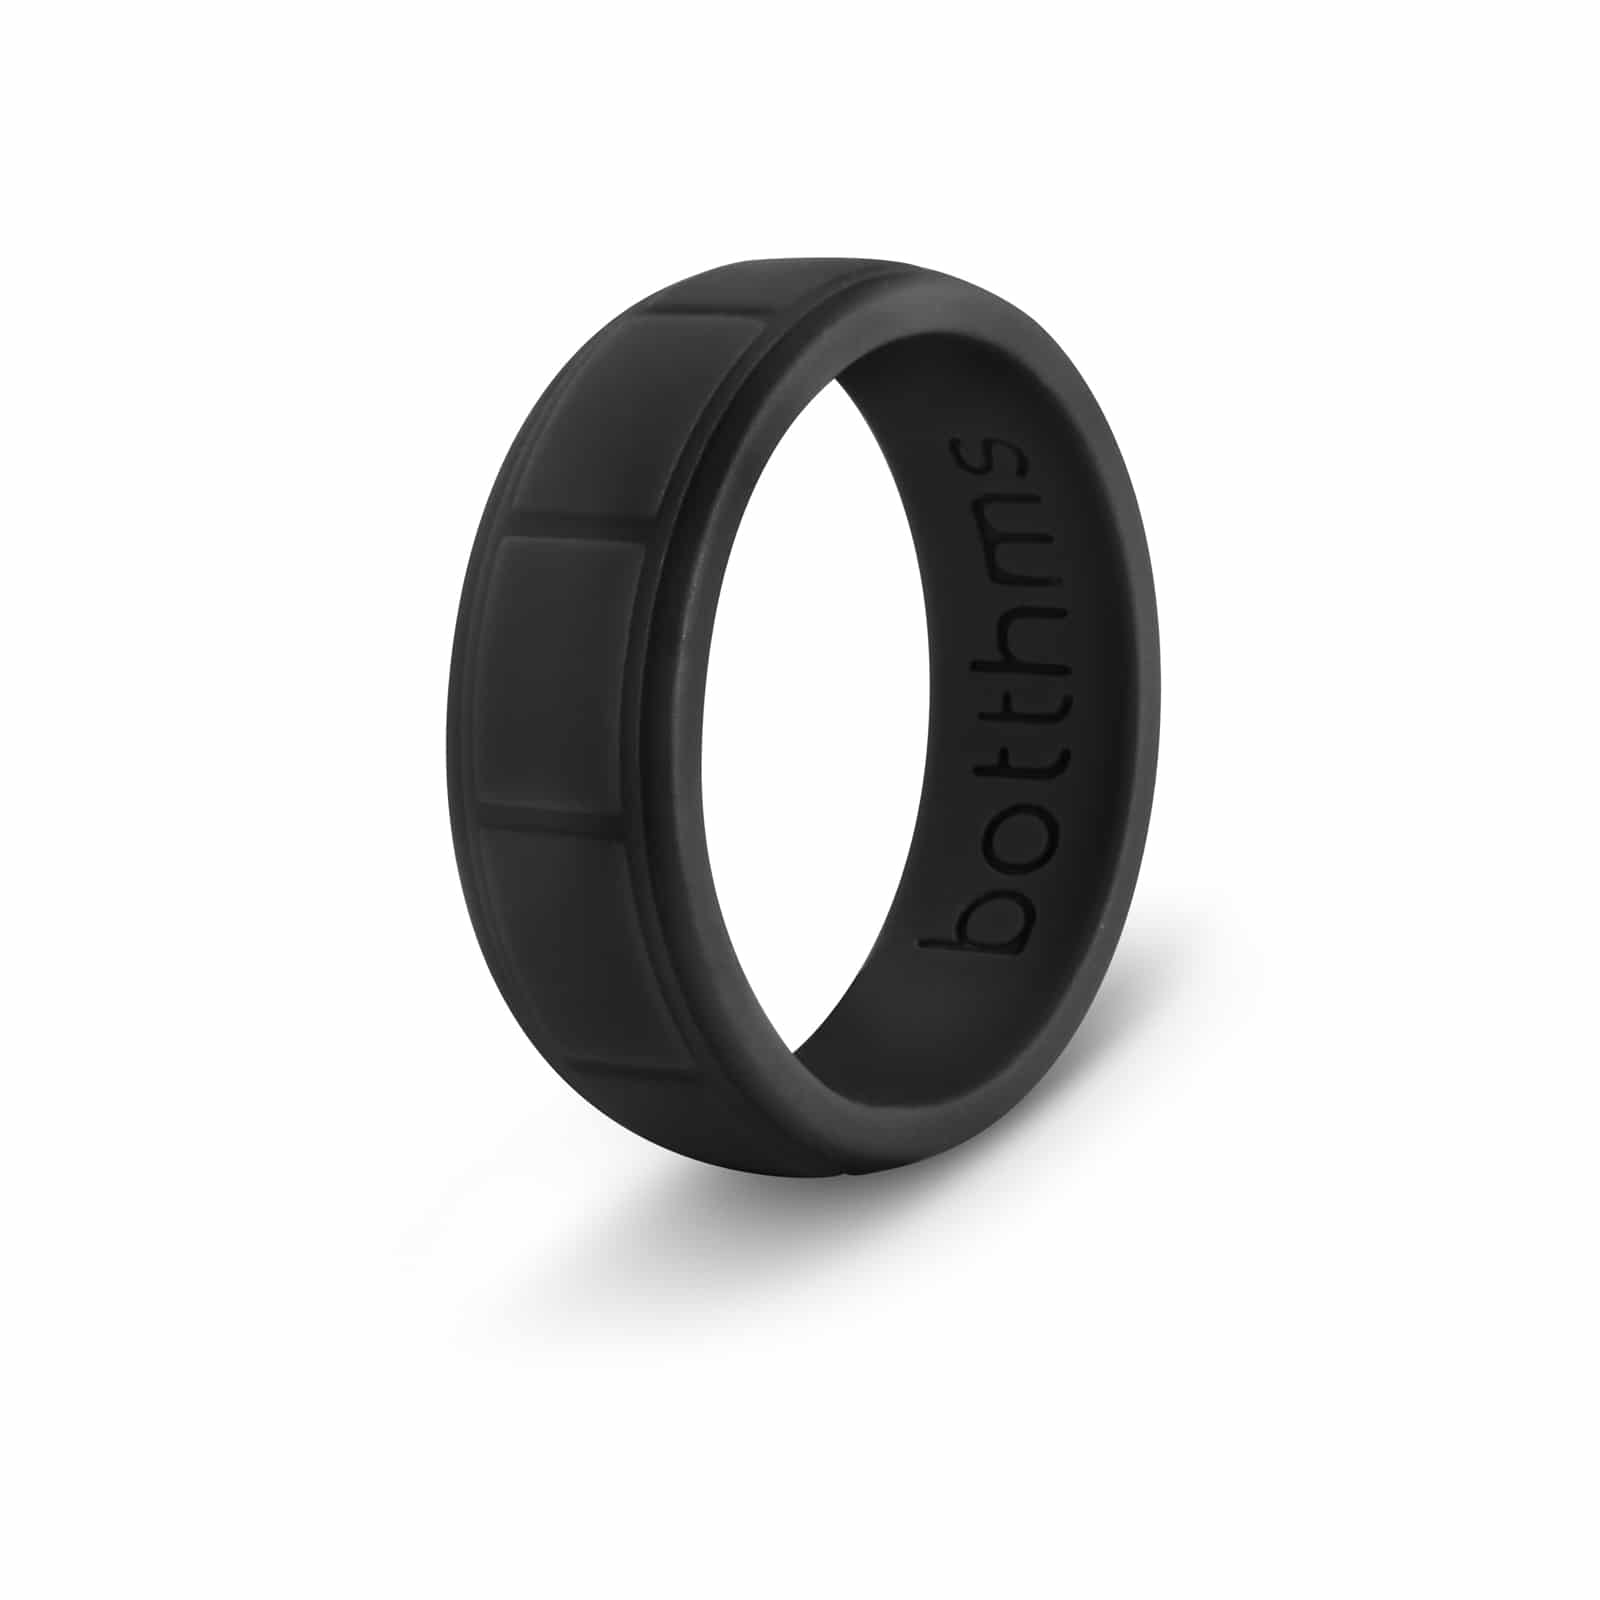 botthms Black Lifestyle Silicone Ring